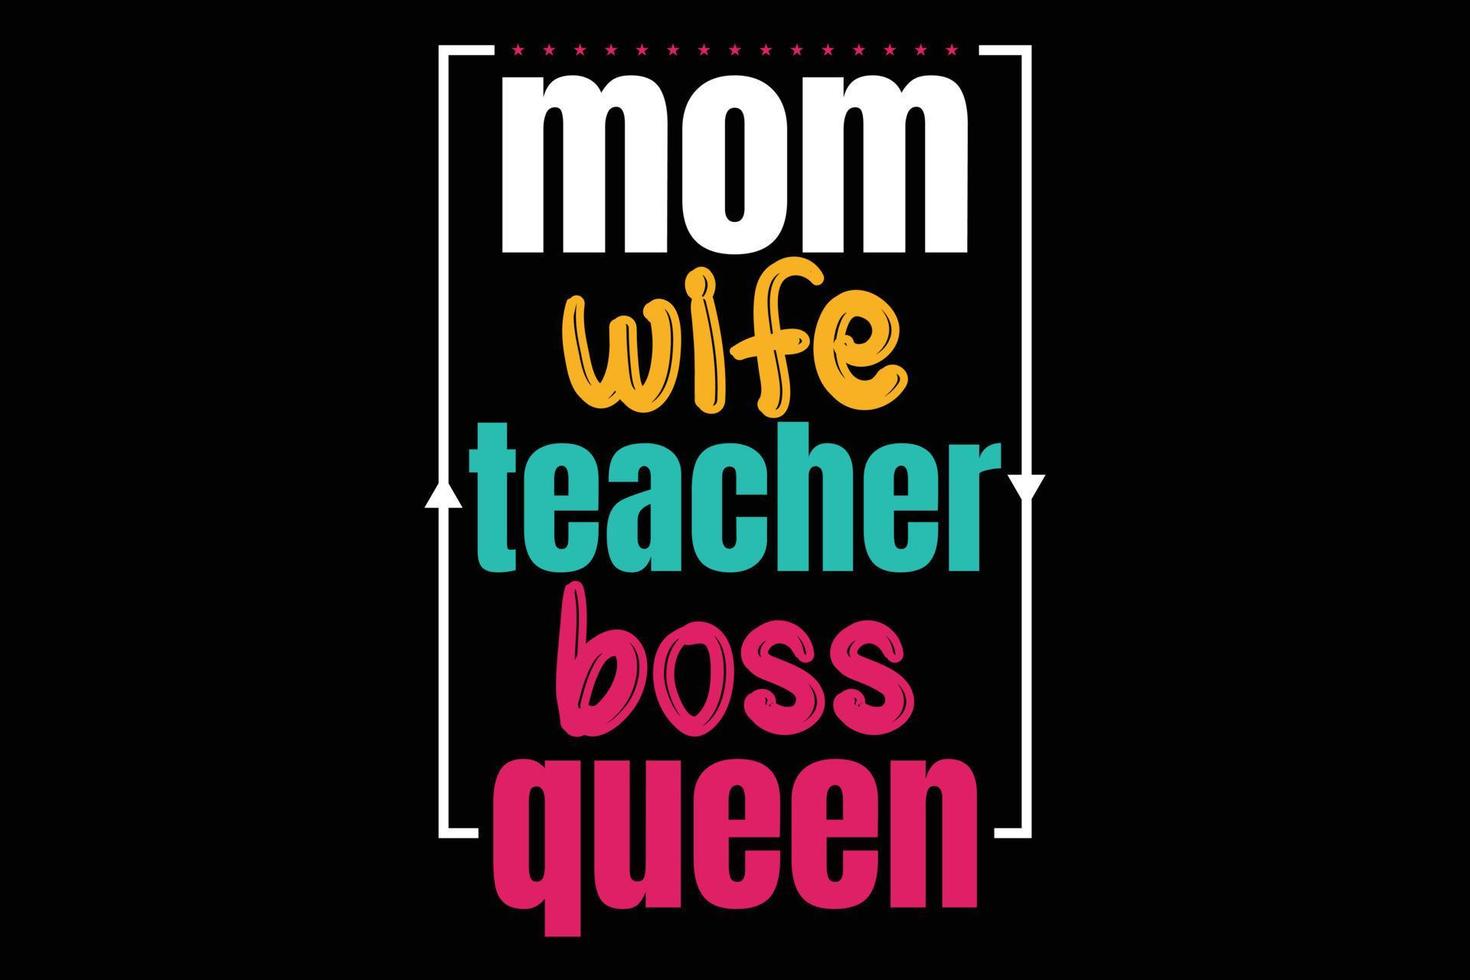 Mom wife teacher boss queen typography mothers day t shirt vector